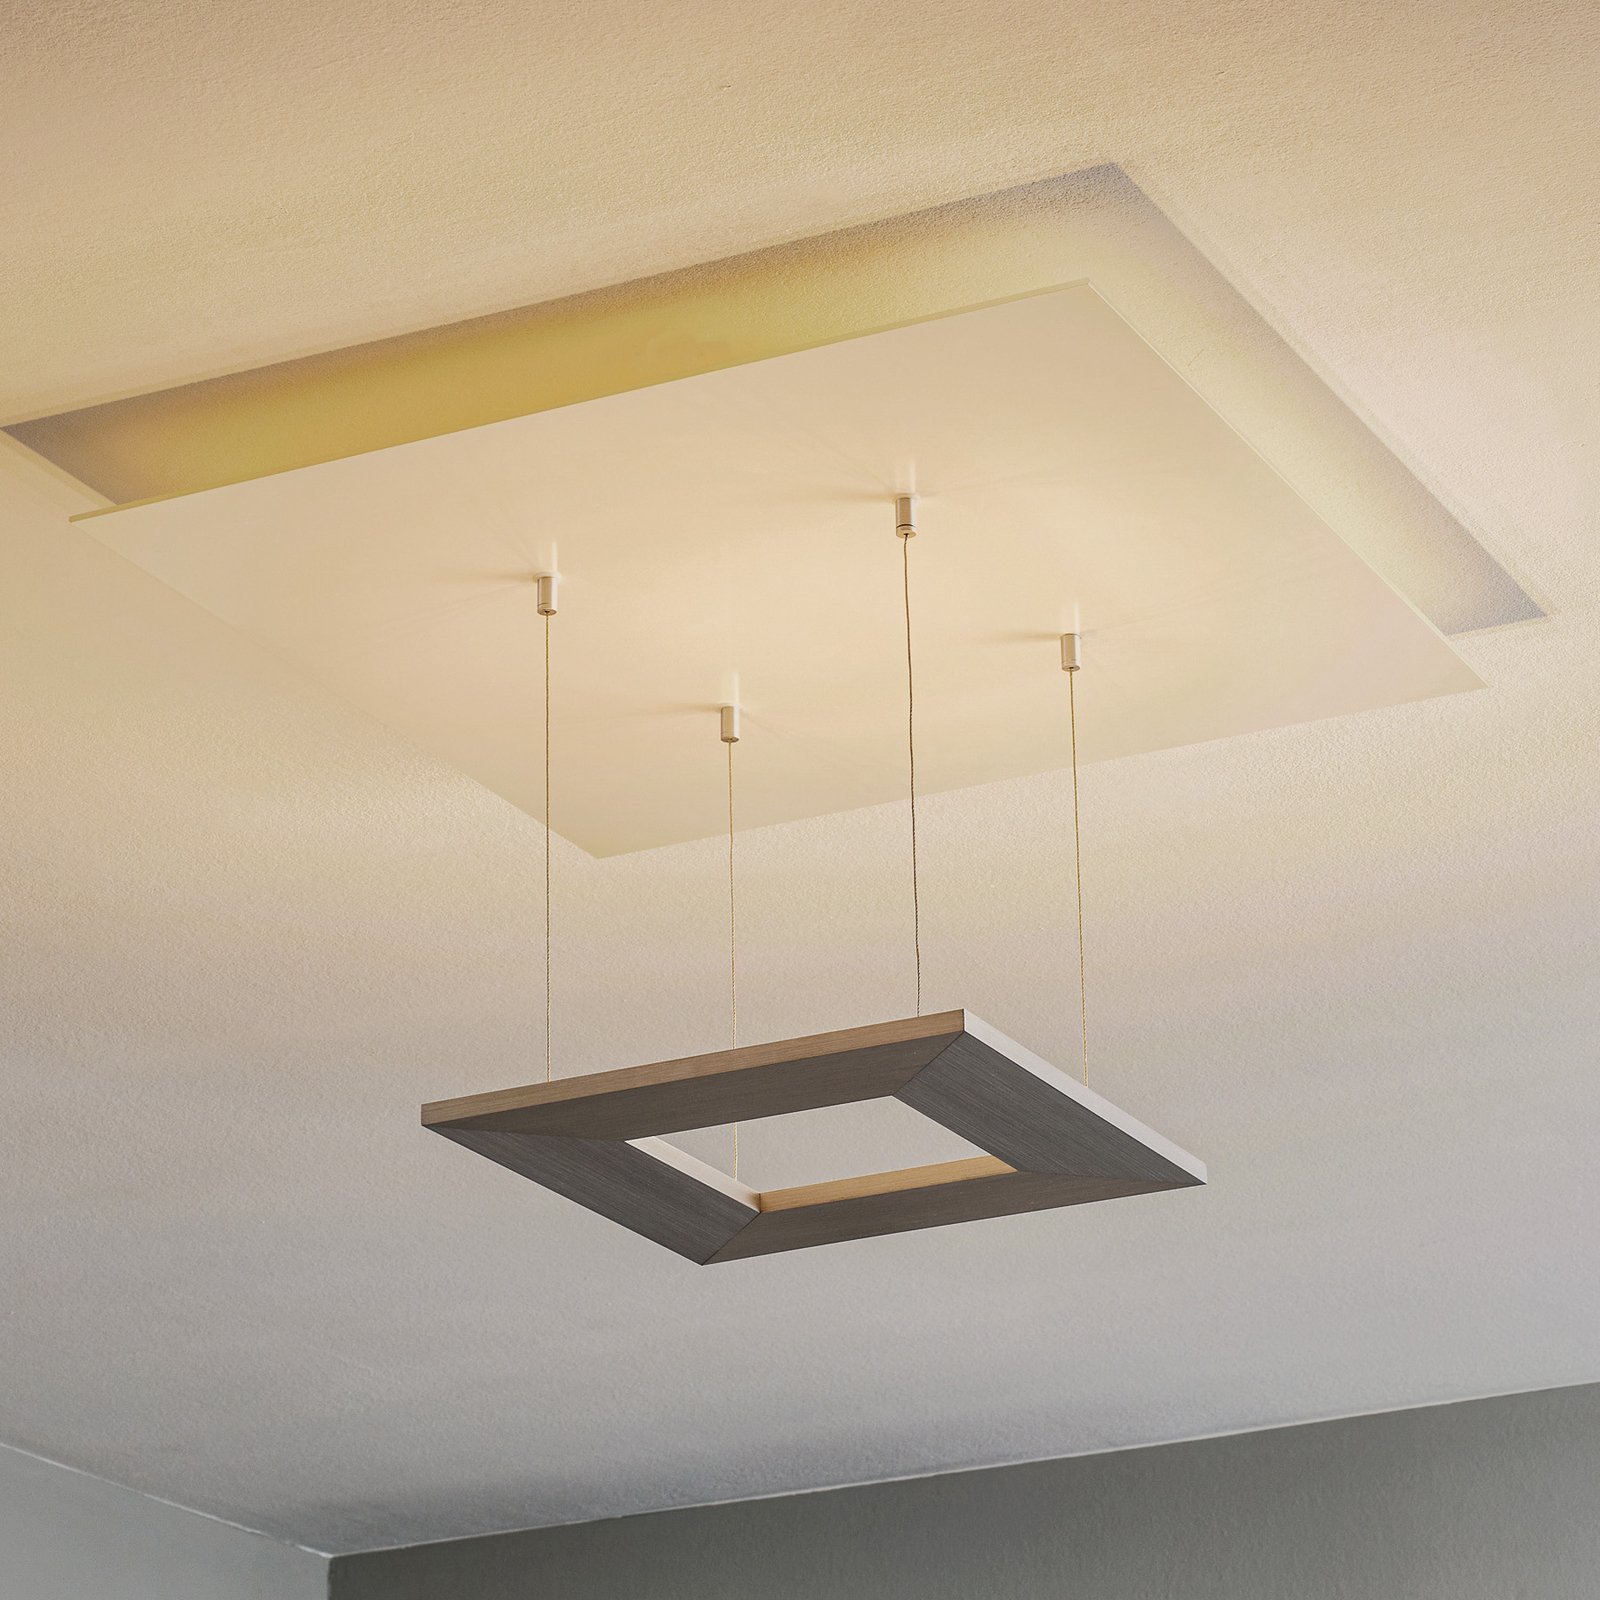 Escale Zen - LED ceiling light, 60 cm, alu